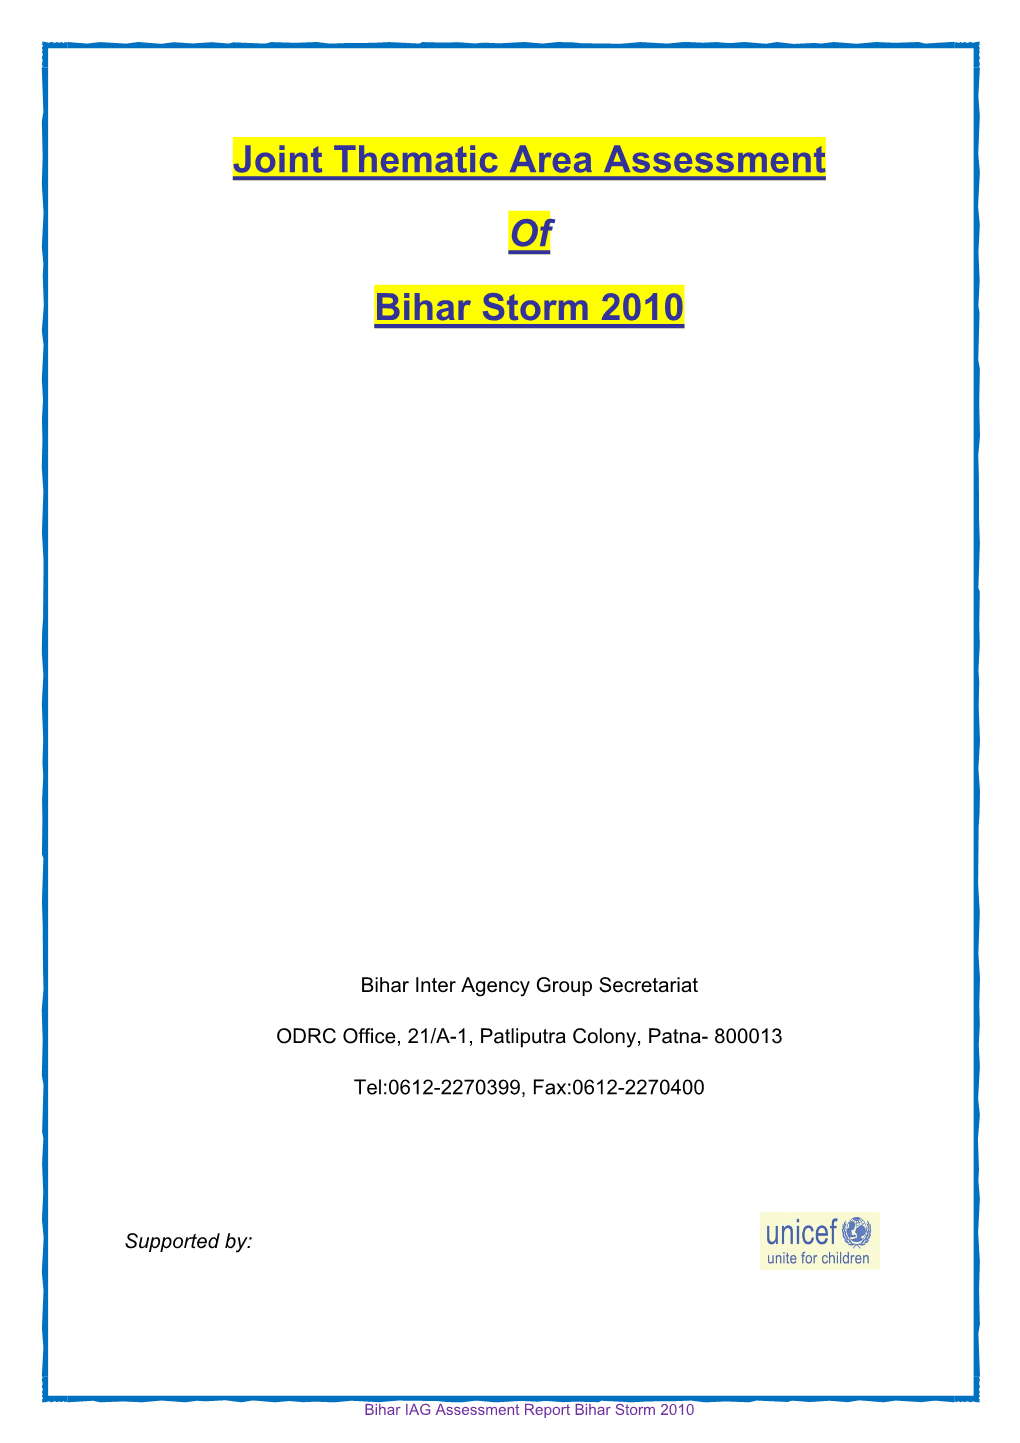 Bihar Storm Assessment Report 2010